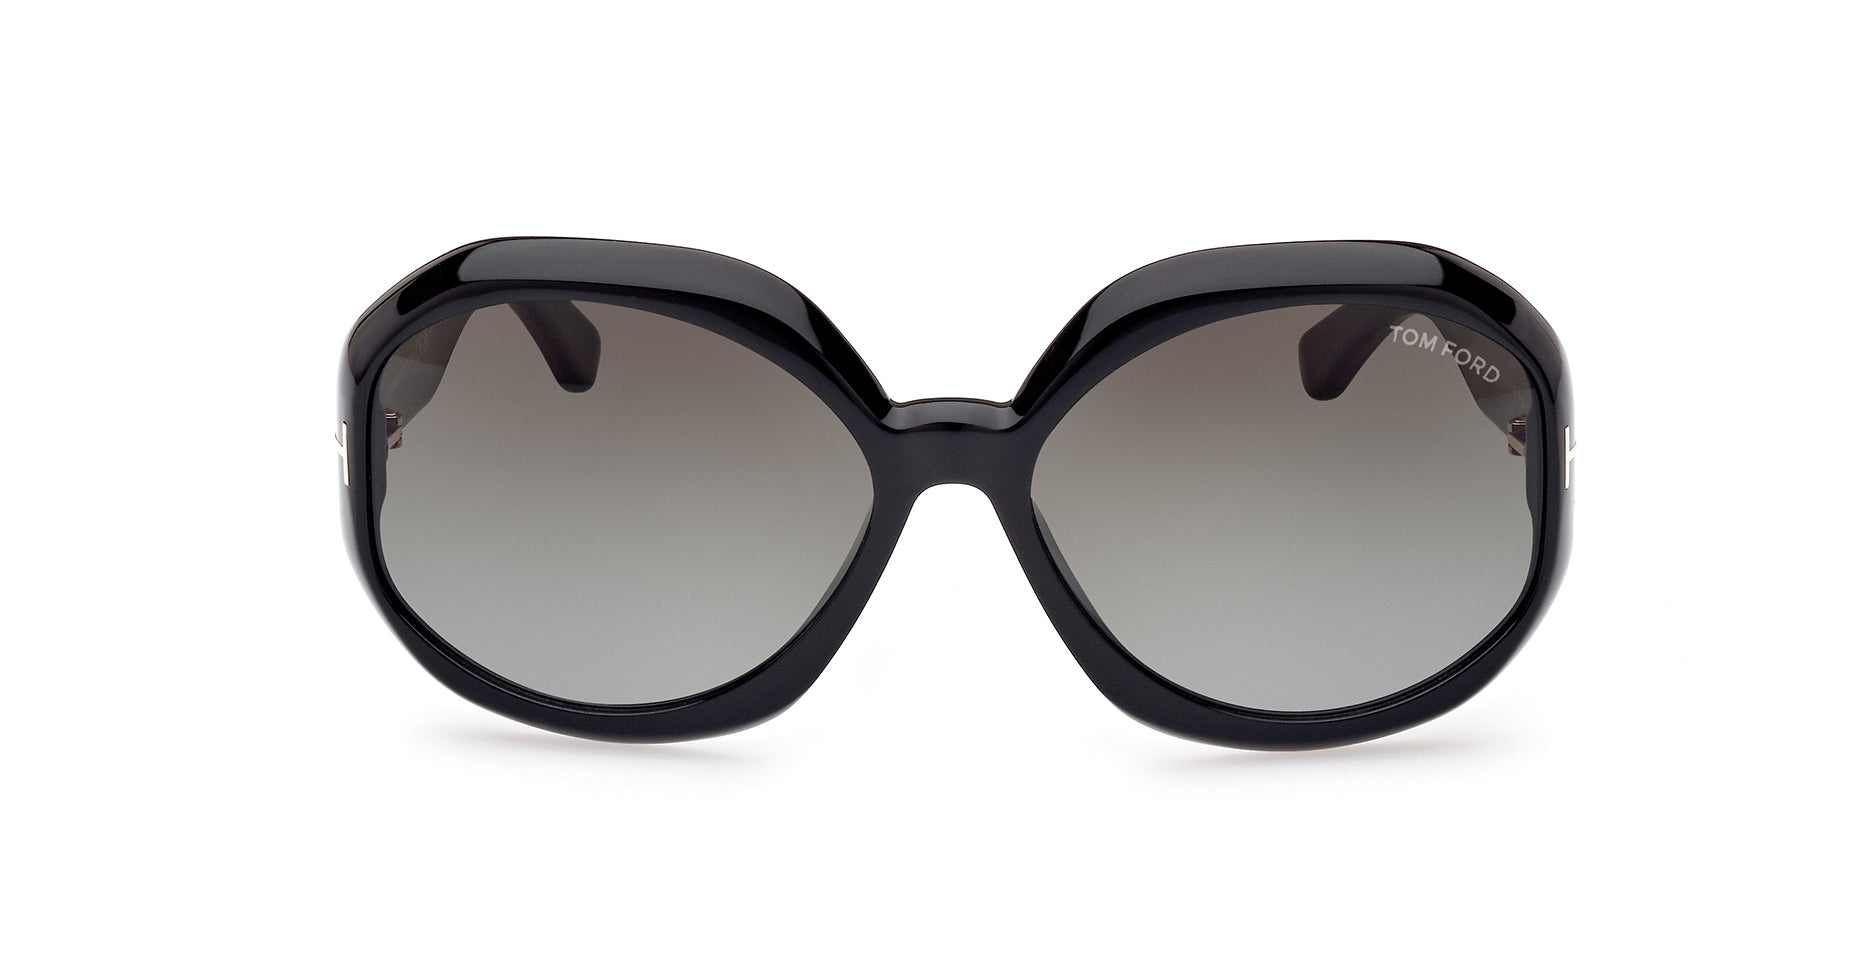 Tom Ford Georgia-02 Round Sunglasses | Fashion Eyewear